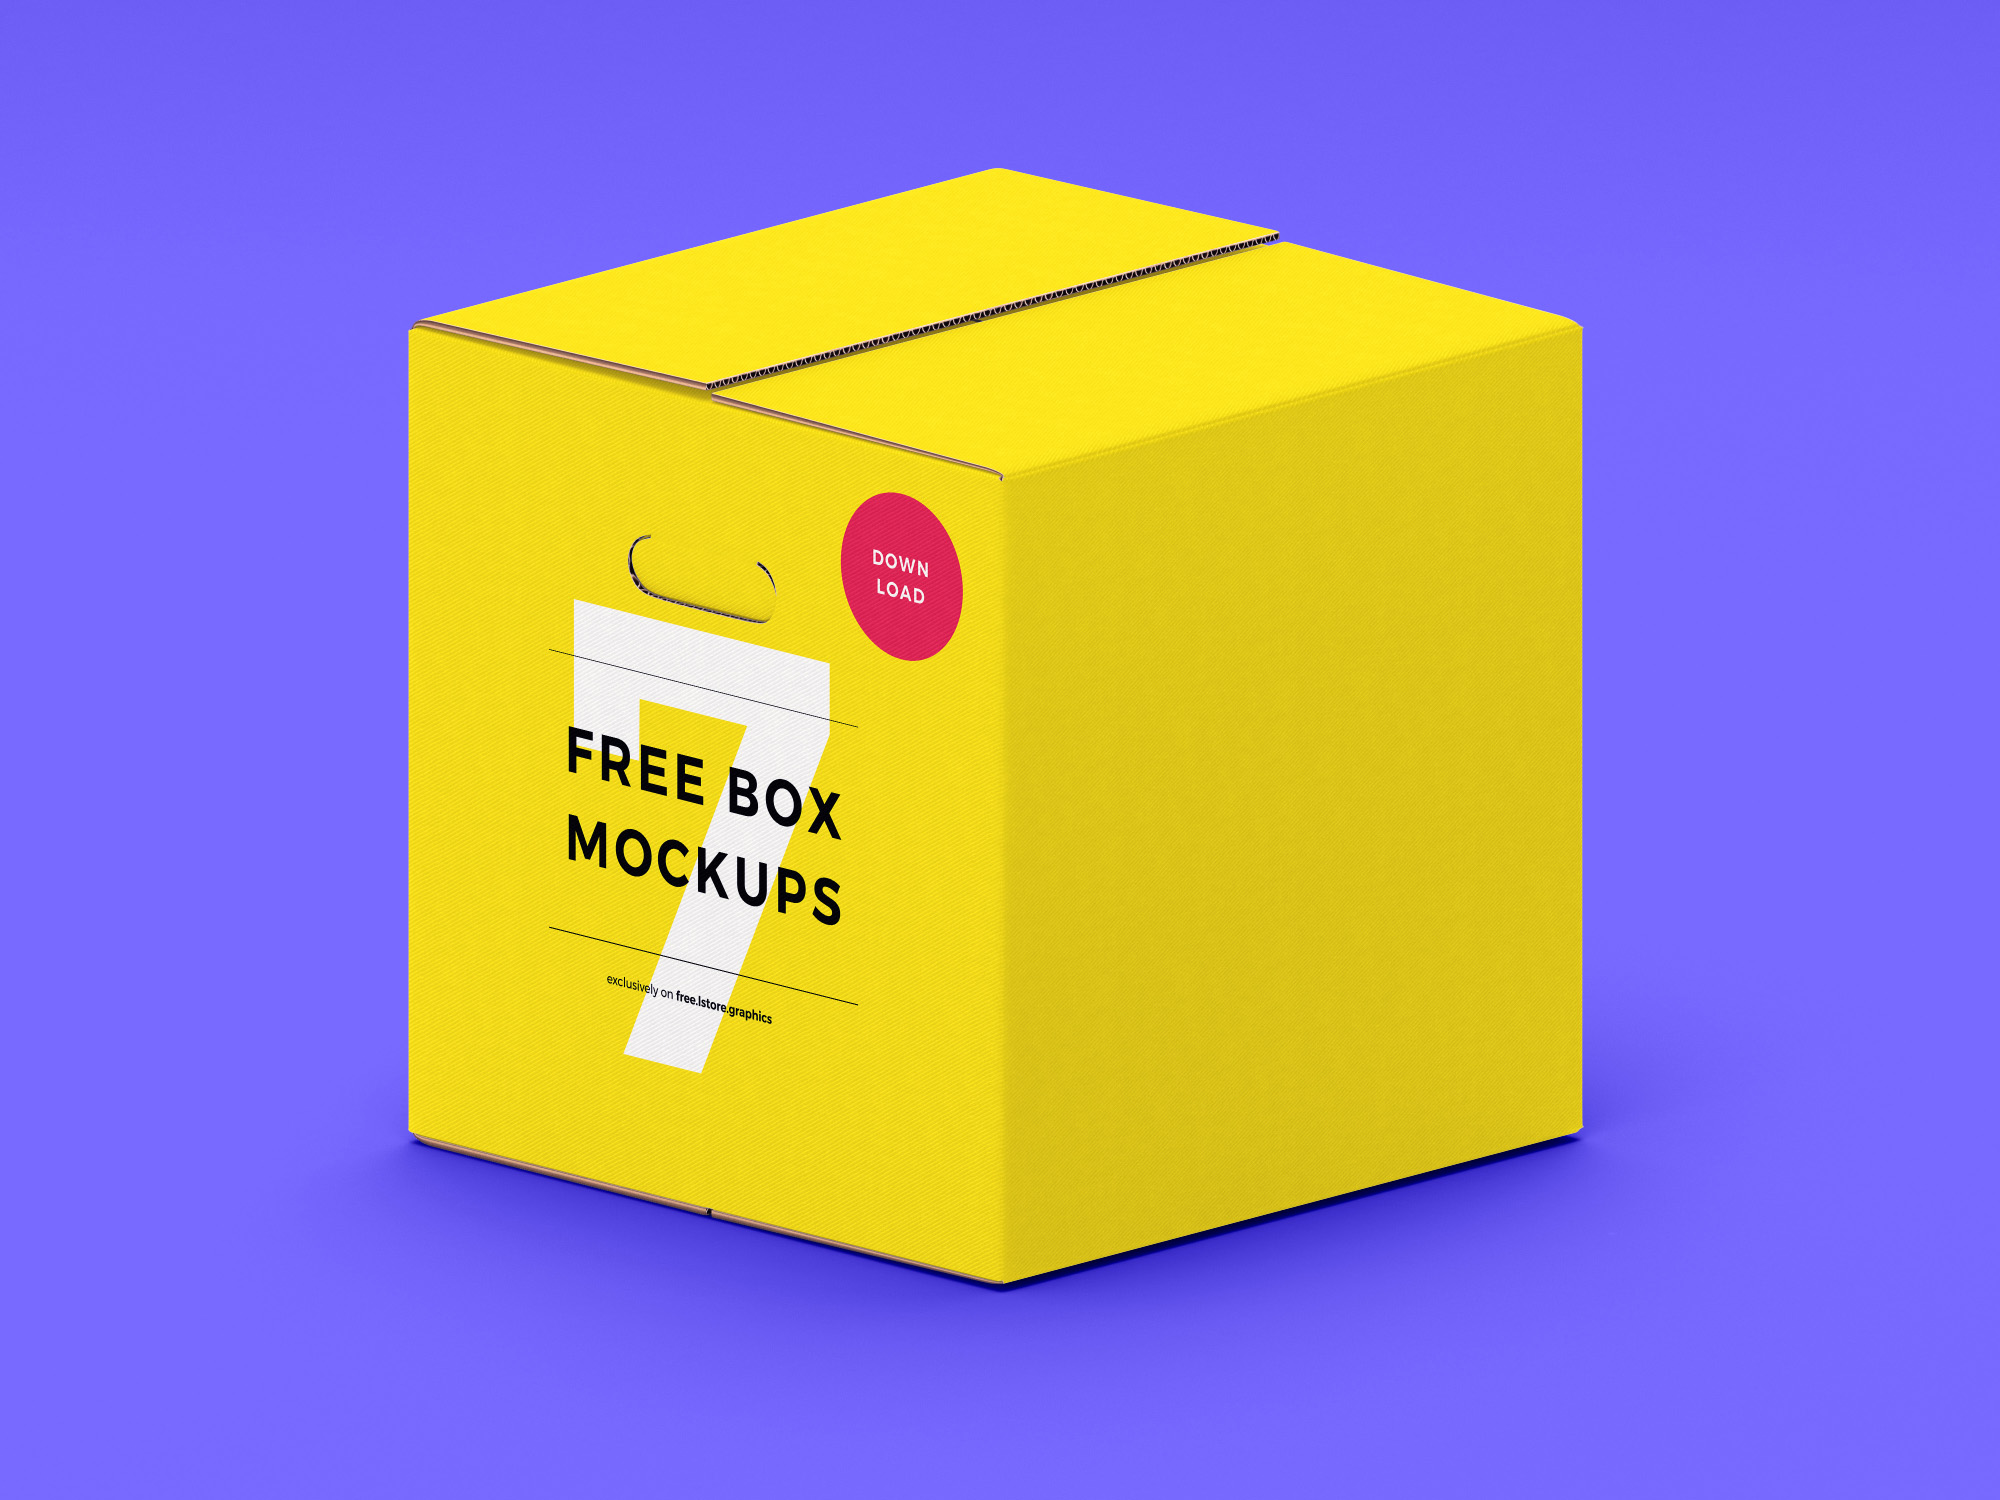 A free set of box mockups